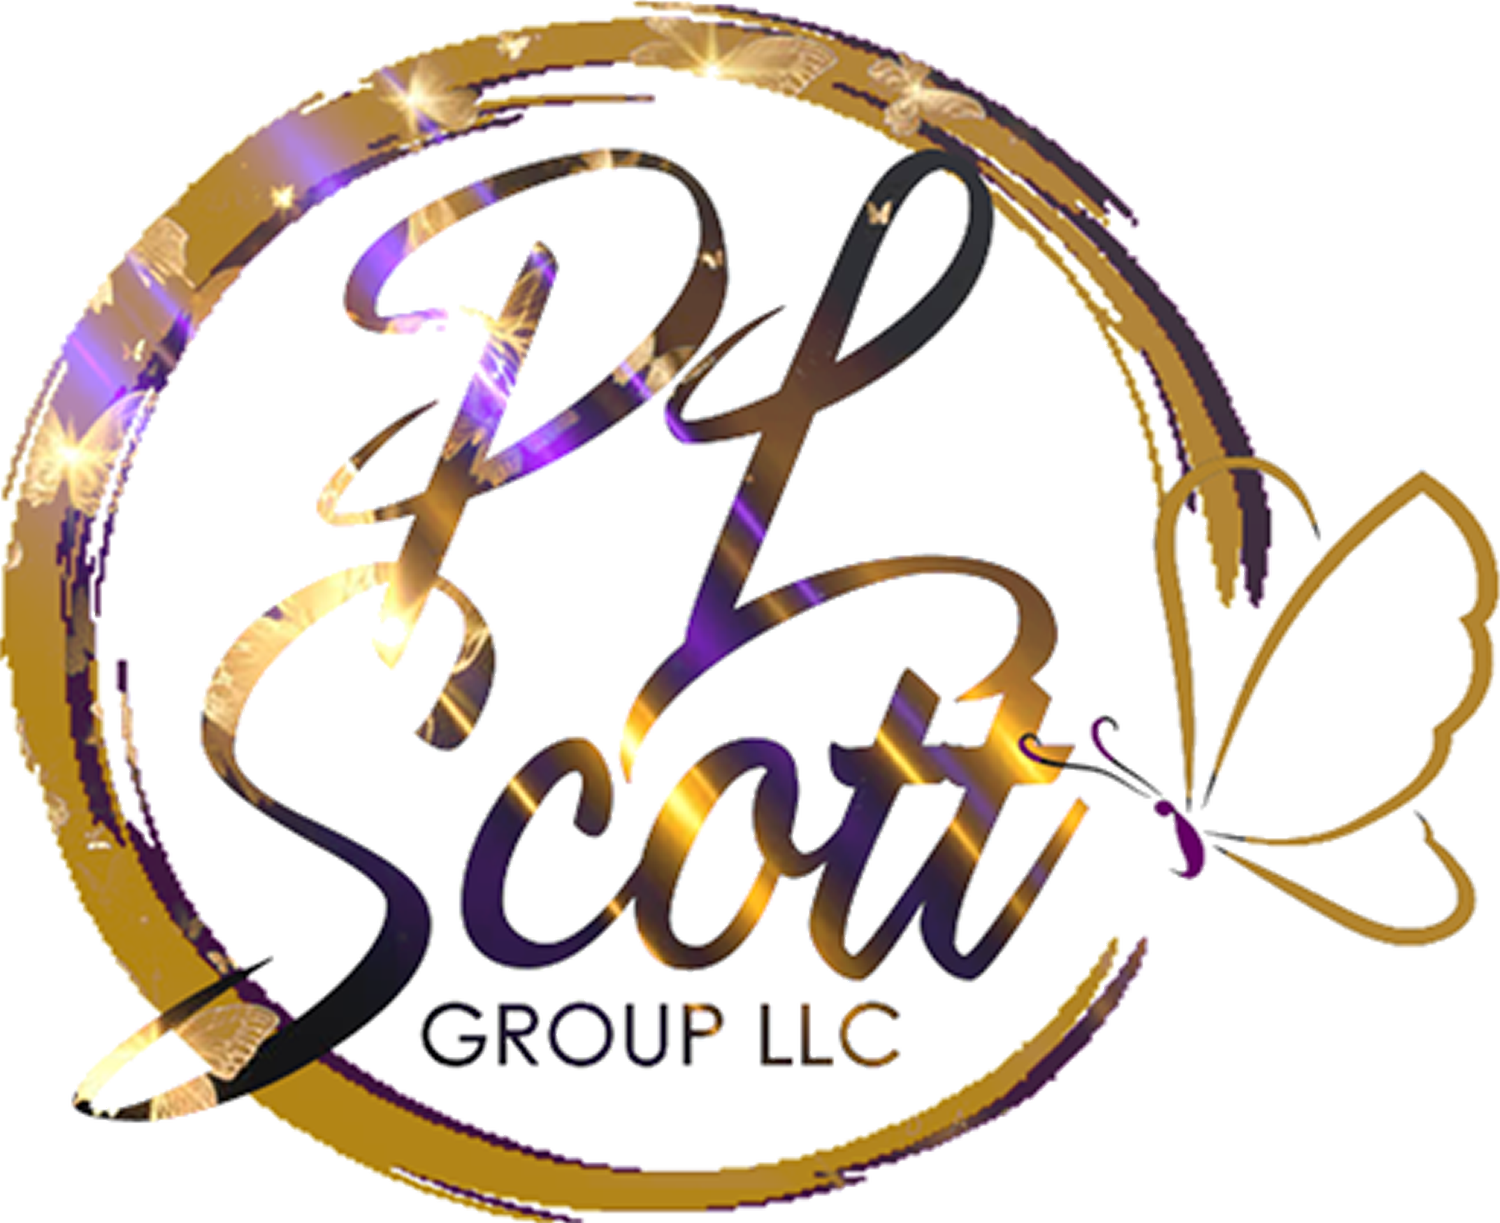  PL Scott Group